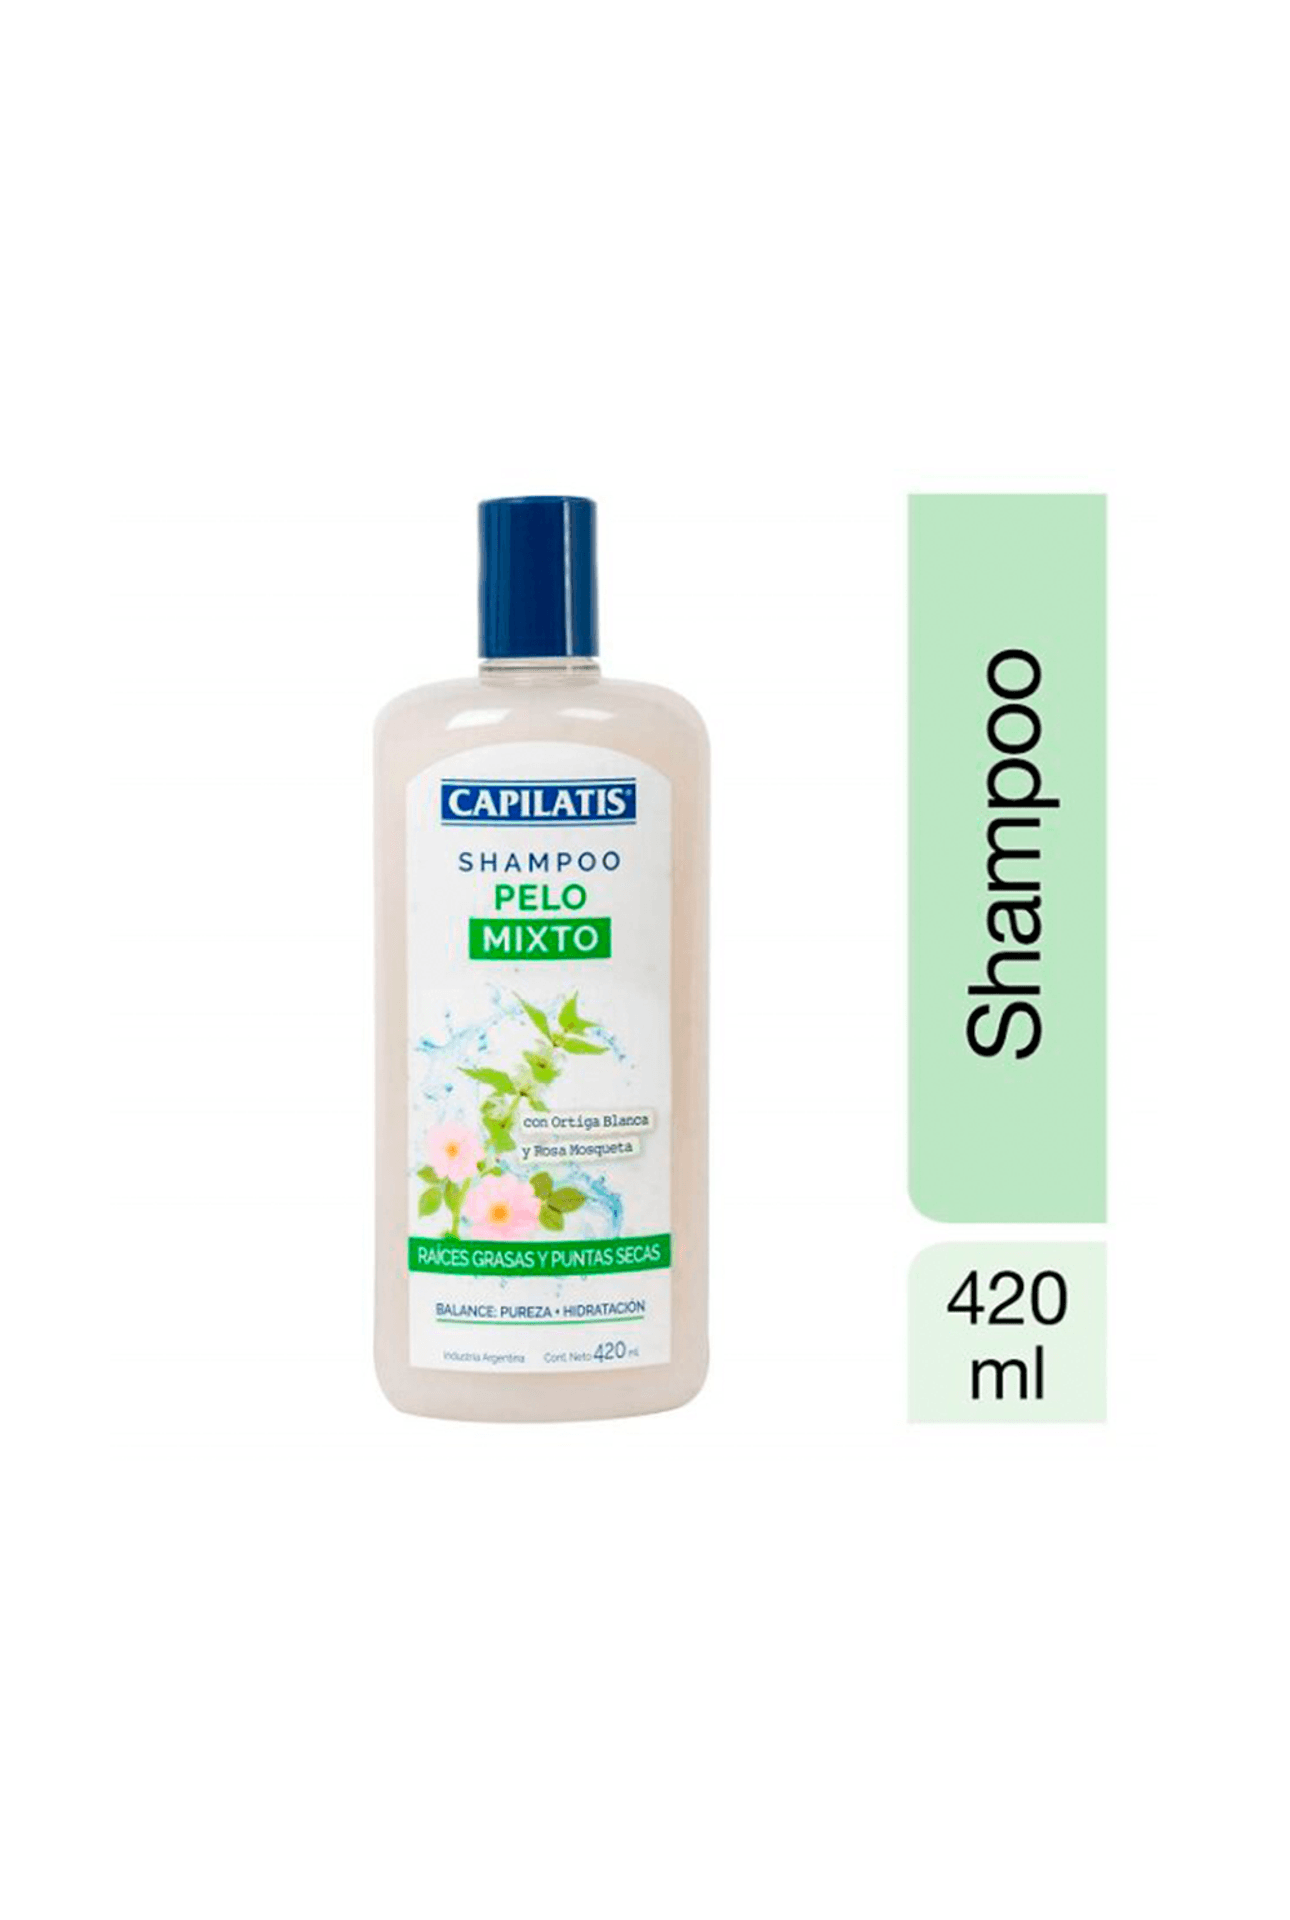 Capilatis-Shampoo-Capilatis-Pelo-Mixto-x-420-ml-7792640004571_img1